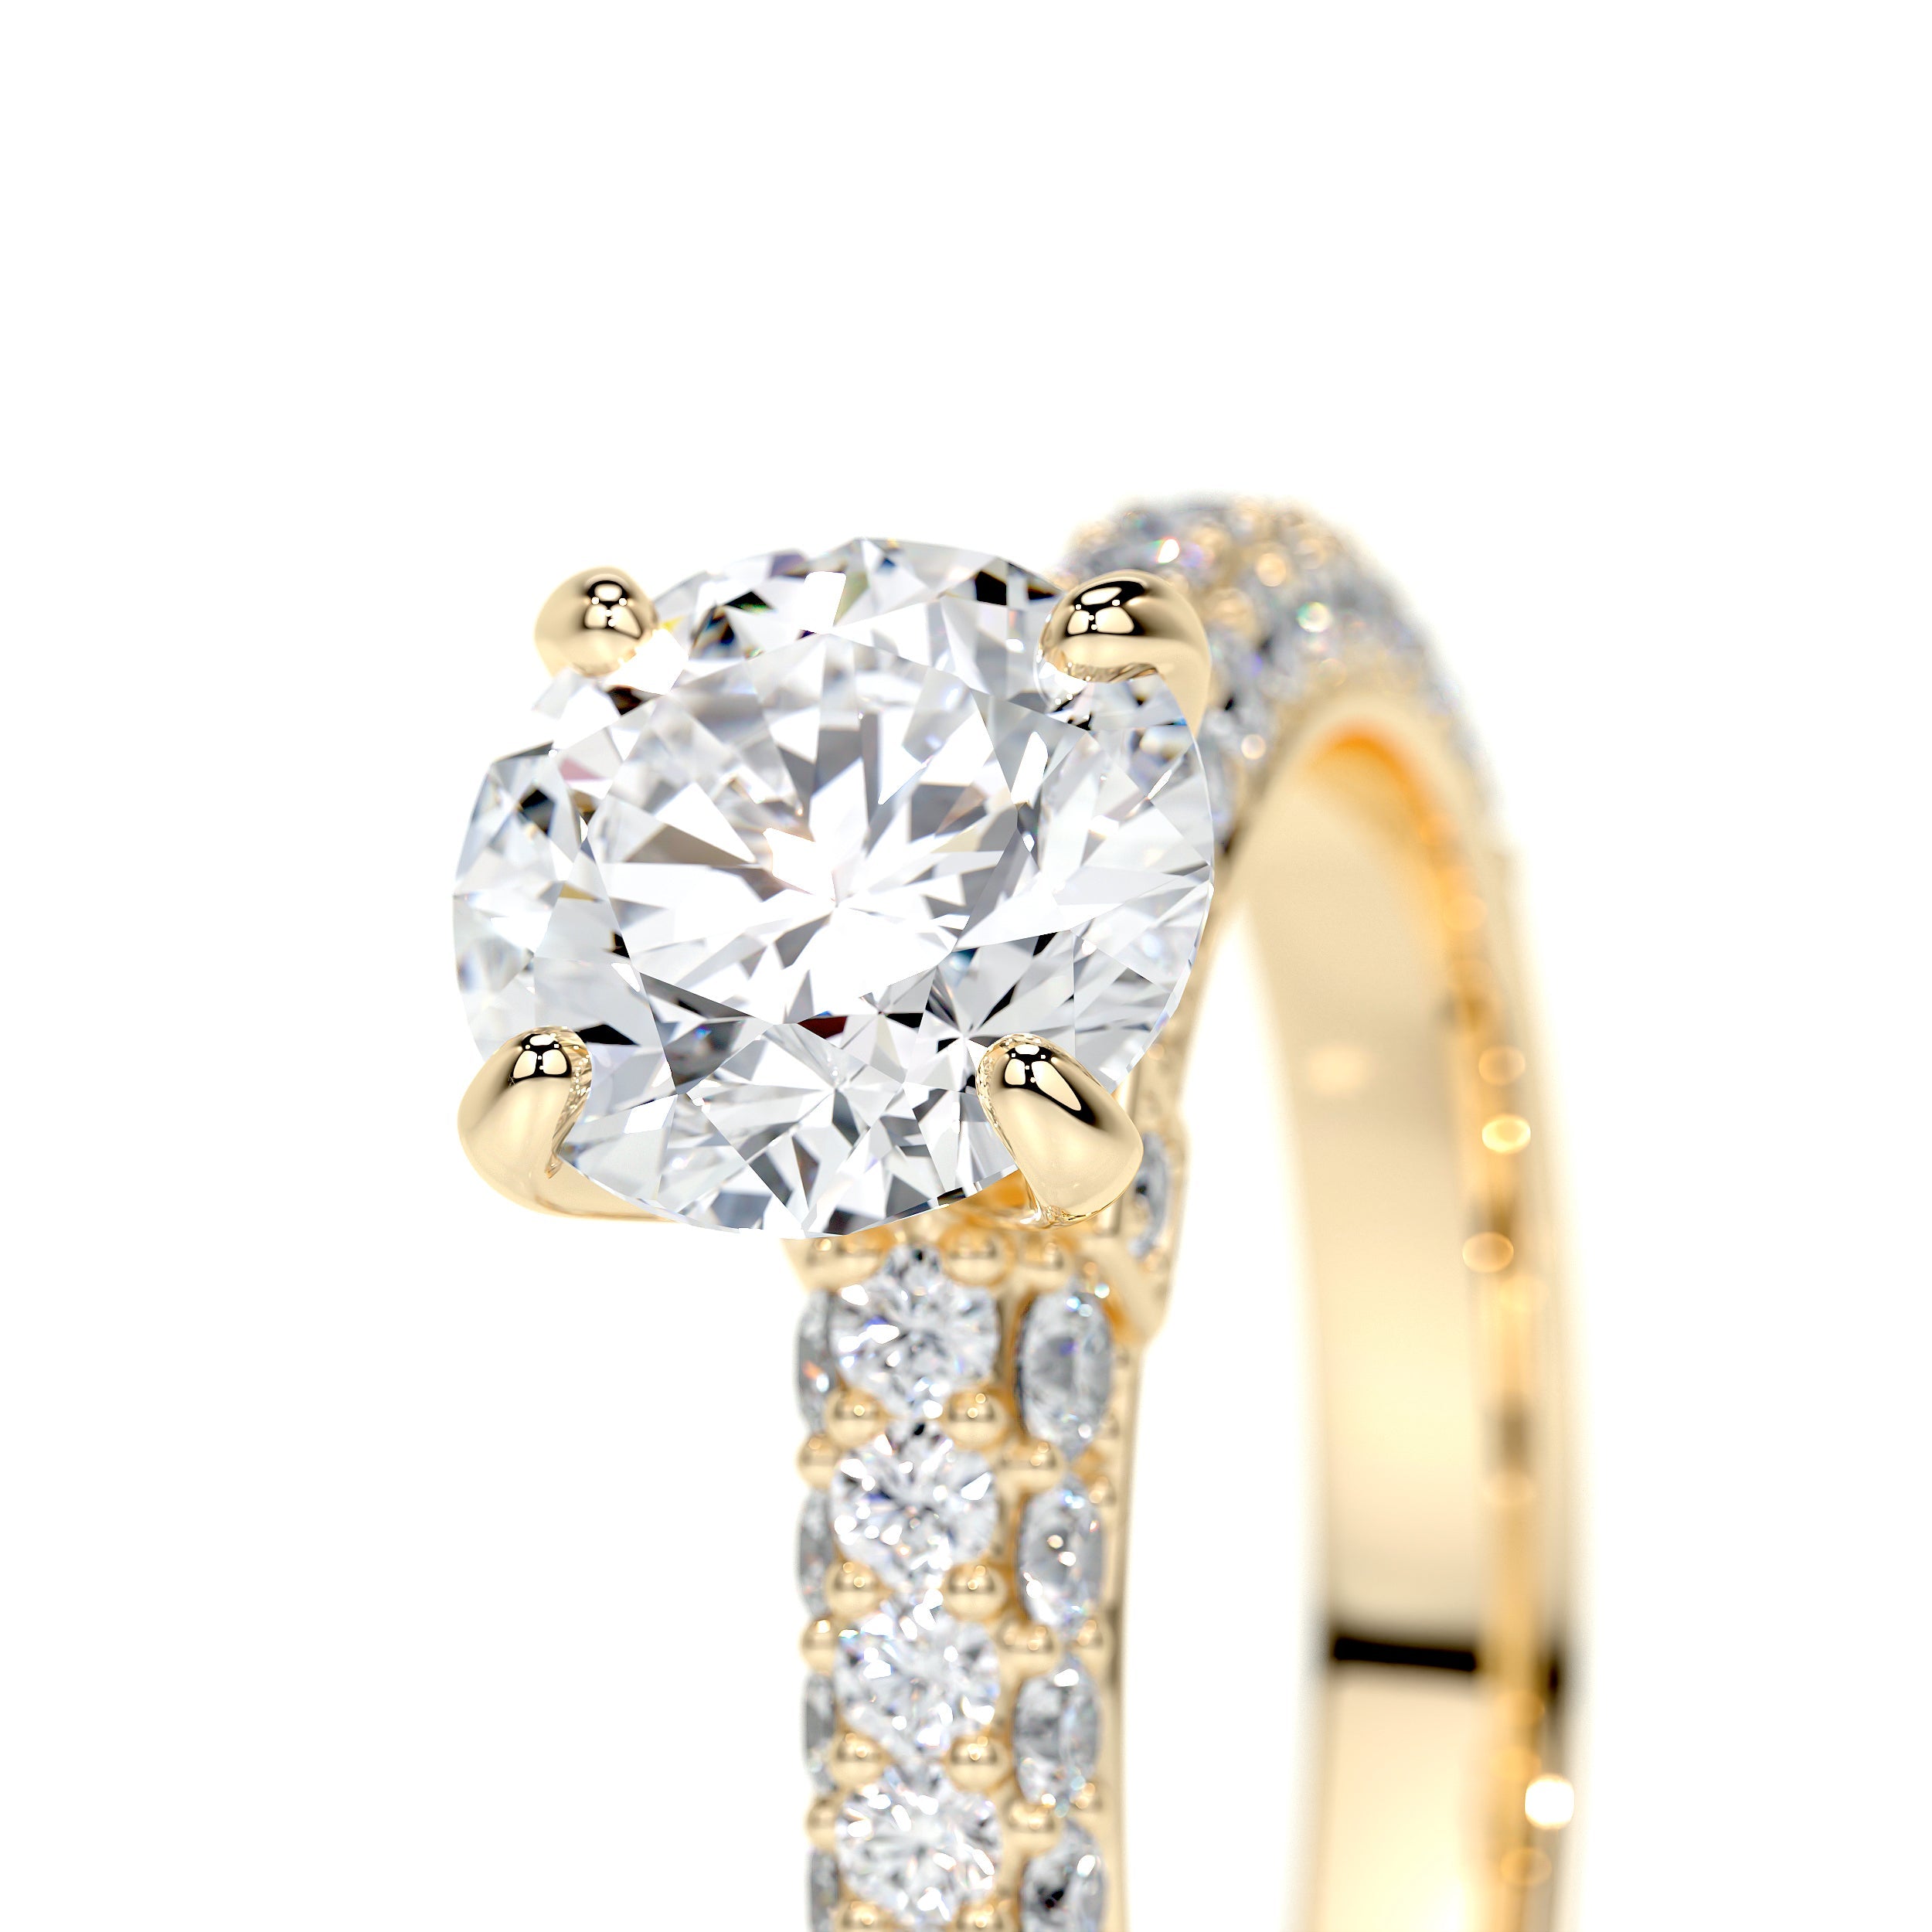 Lillian Lab Grown Diamond Ring   (1.5 Carat) -18K Yellow Gold